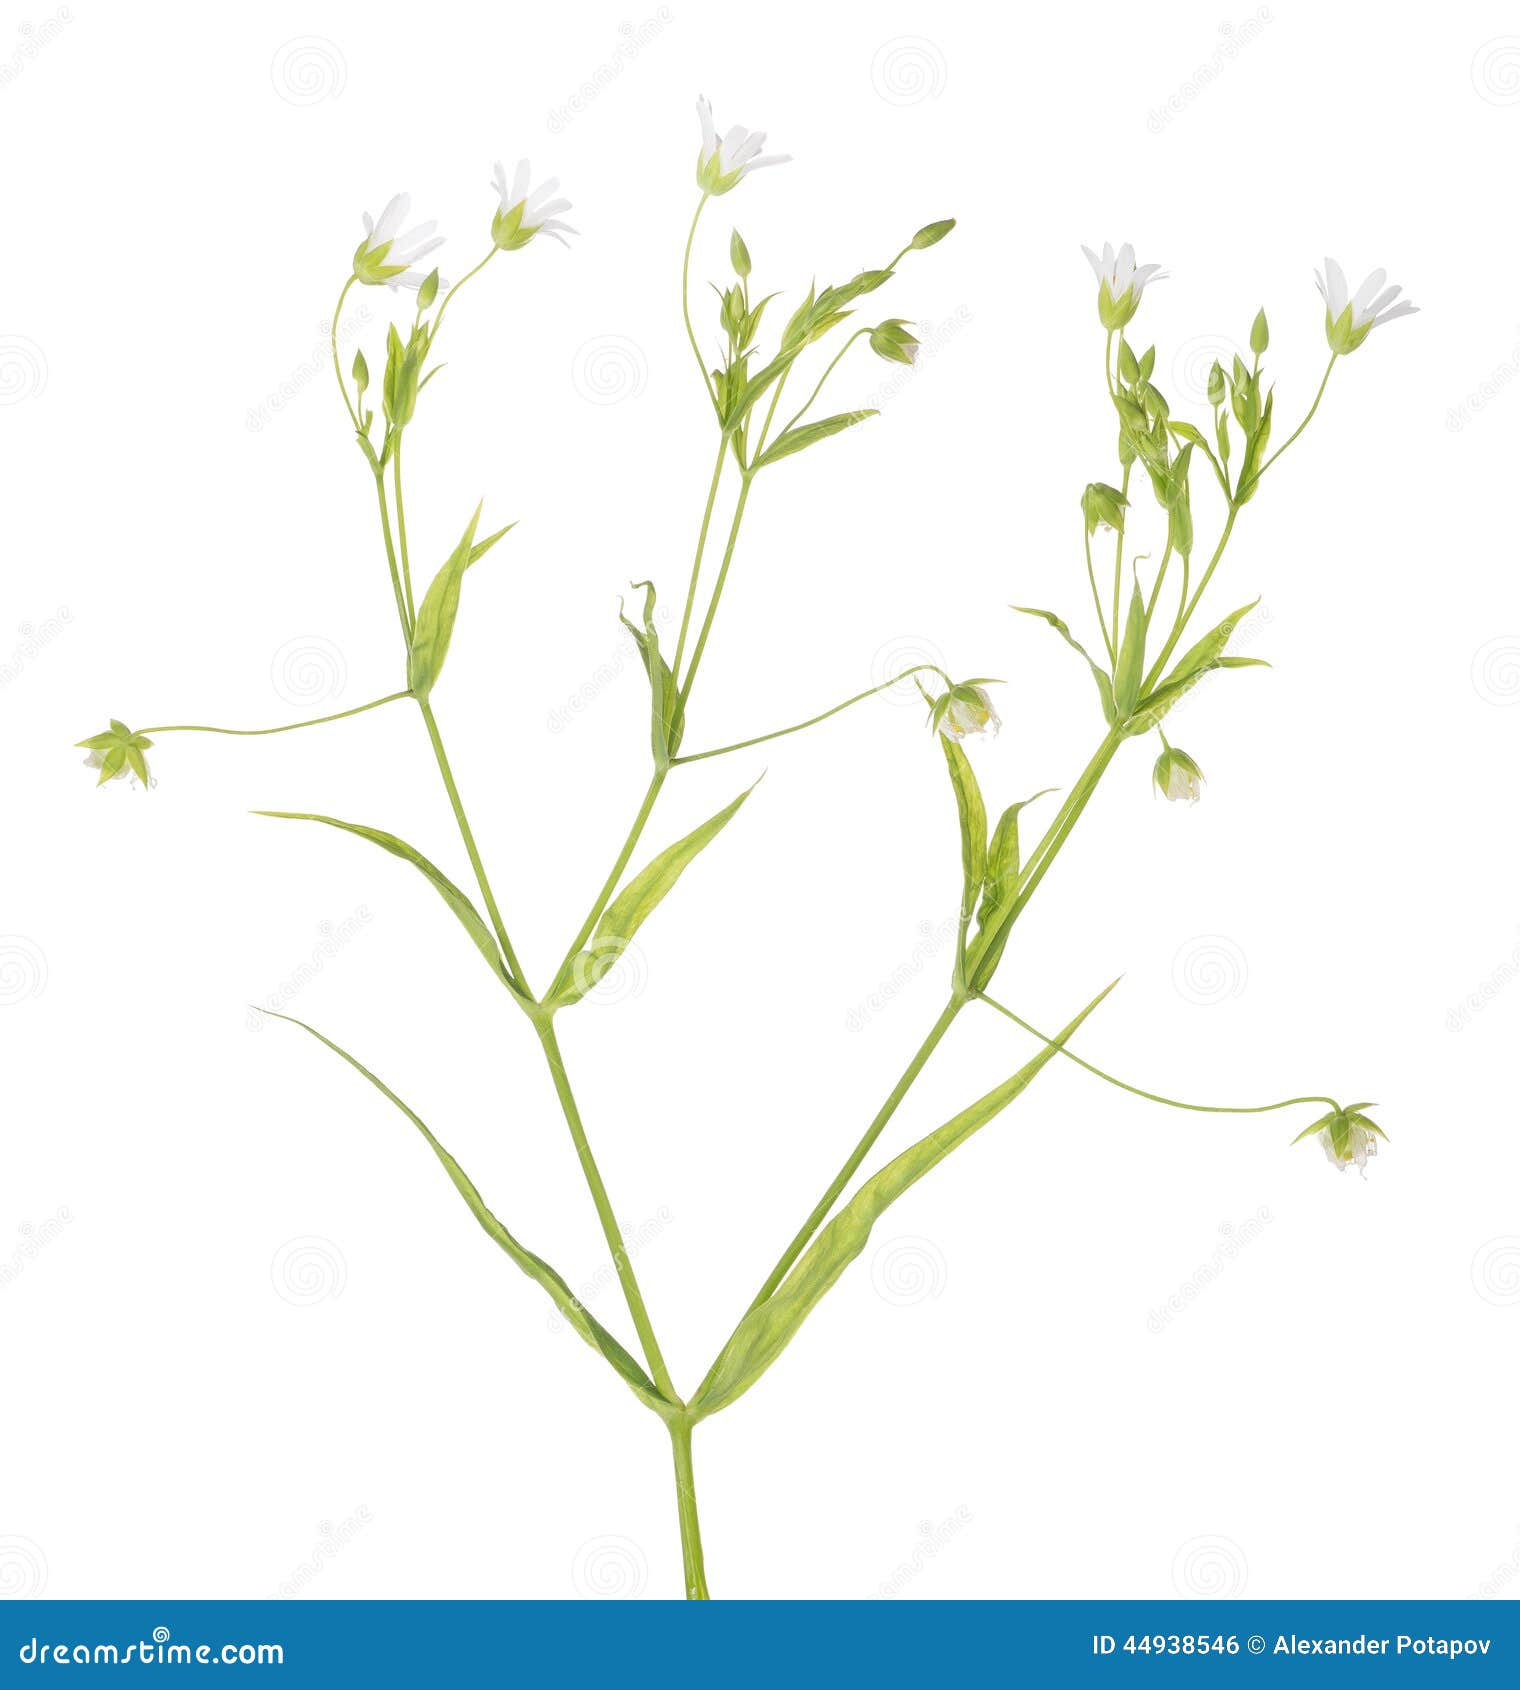 small stellaria flowers on white